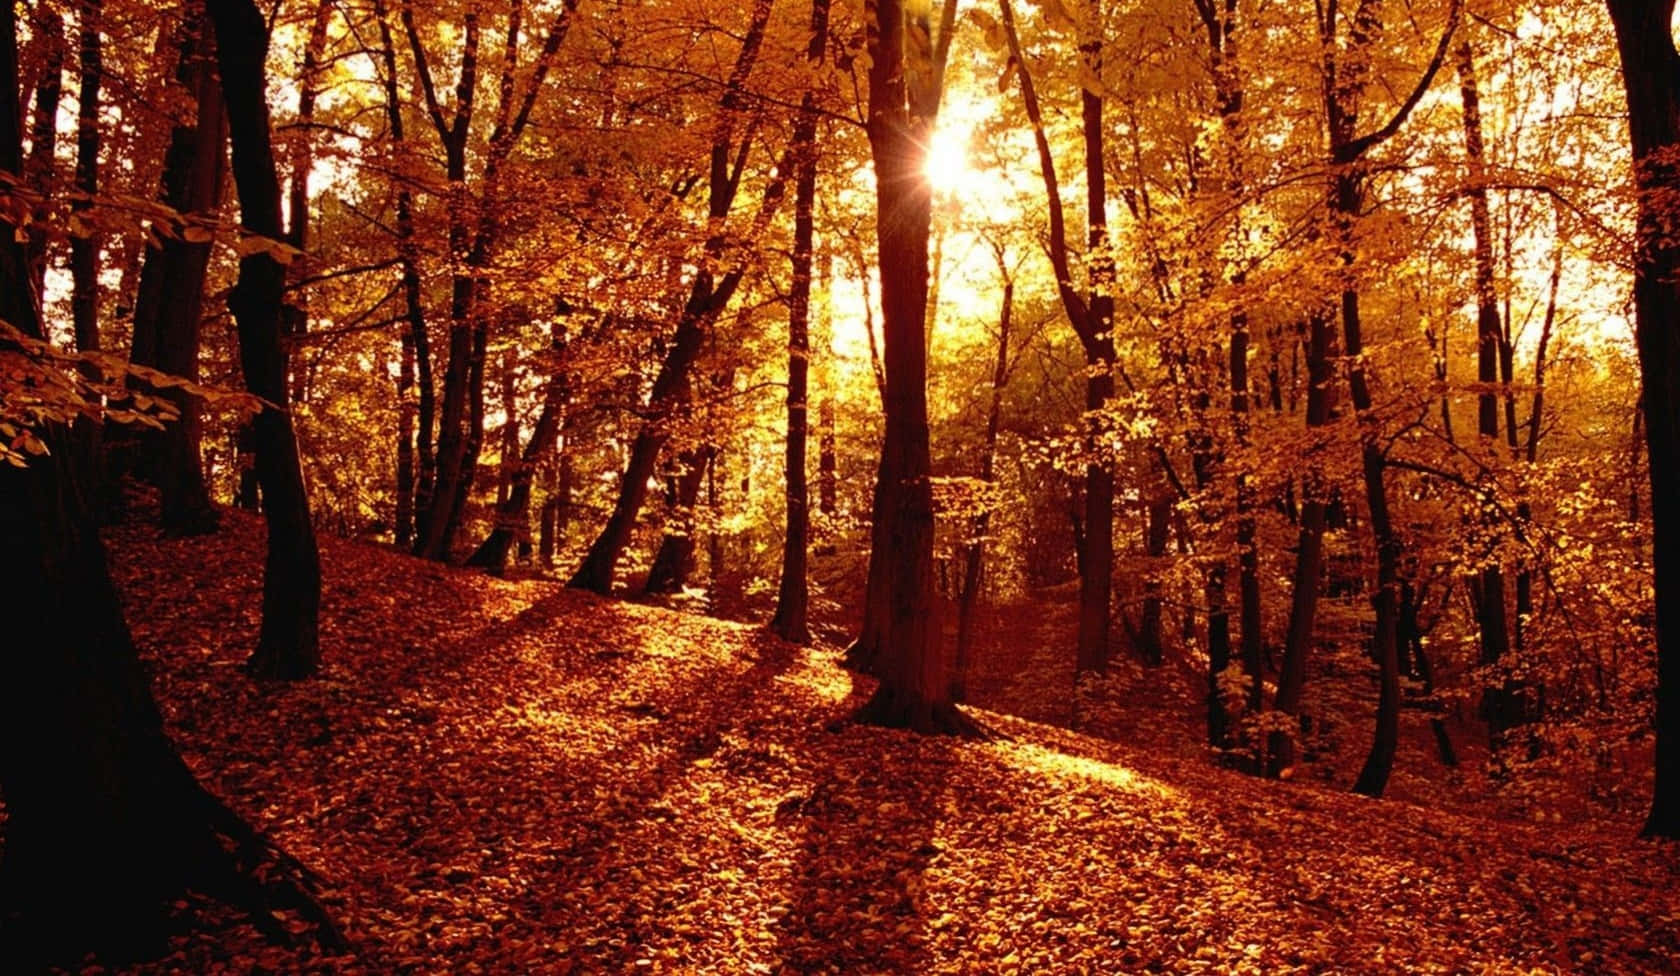 Capture the Autumn beauty of the season with this stunning Tumblr Autumn Desktop wallpaper. Wallpaper